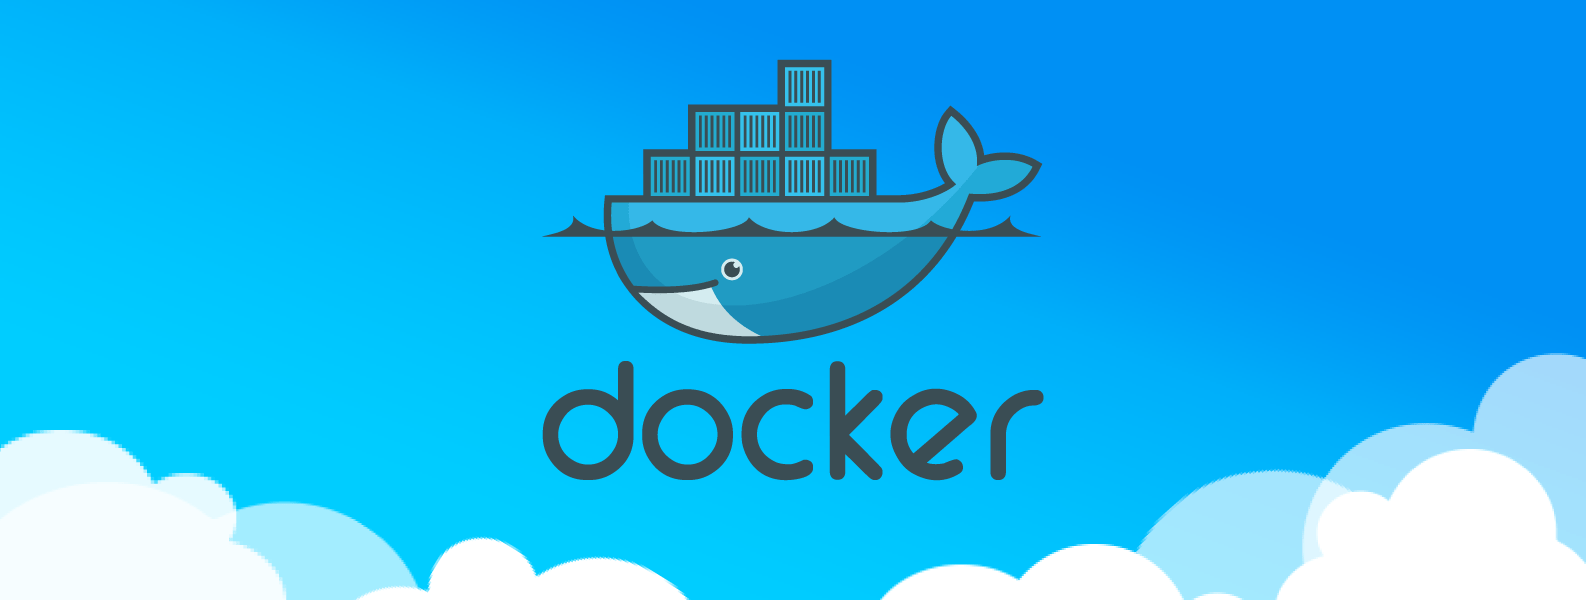 Create Production Docker Images - Docker Cloud , HD Wallpaper & Backgrounds